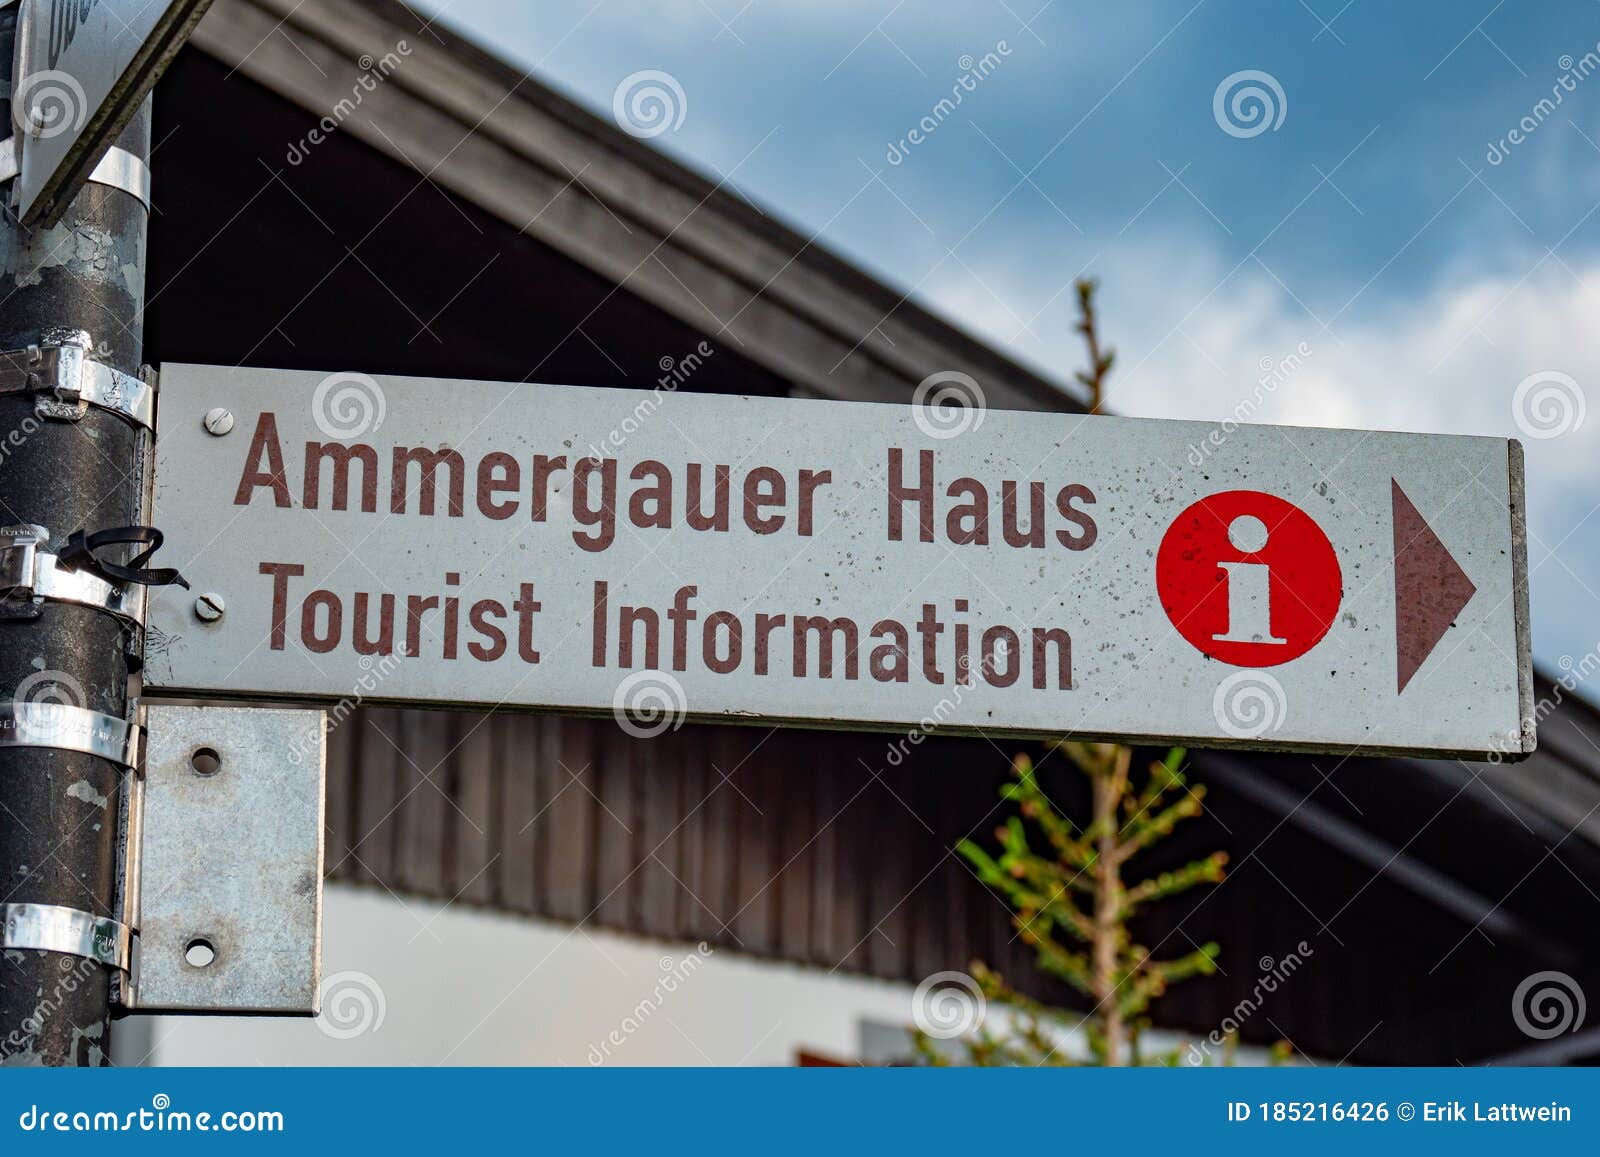 oberammergau tourist info